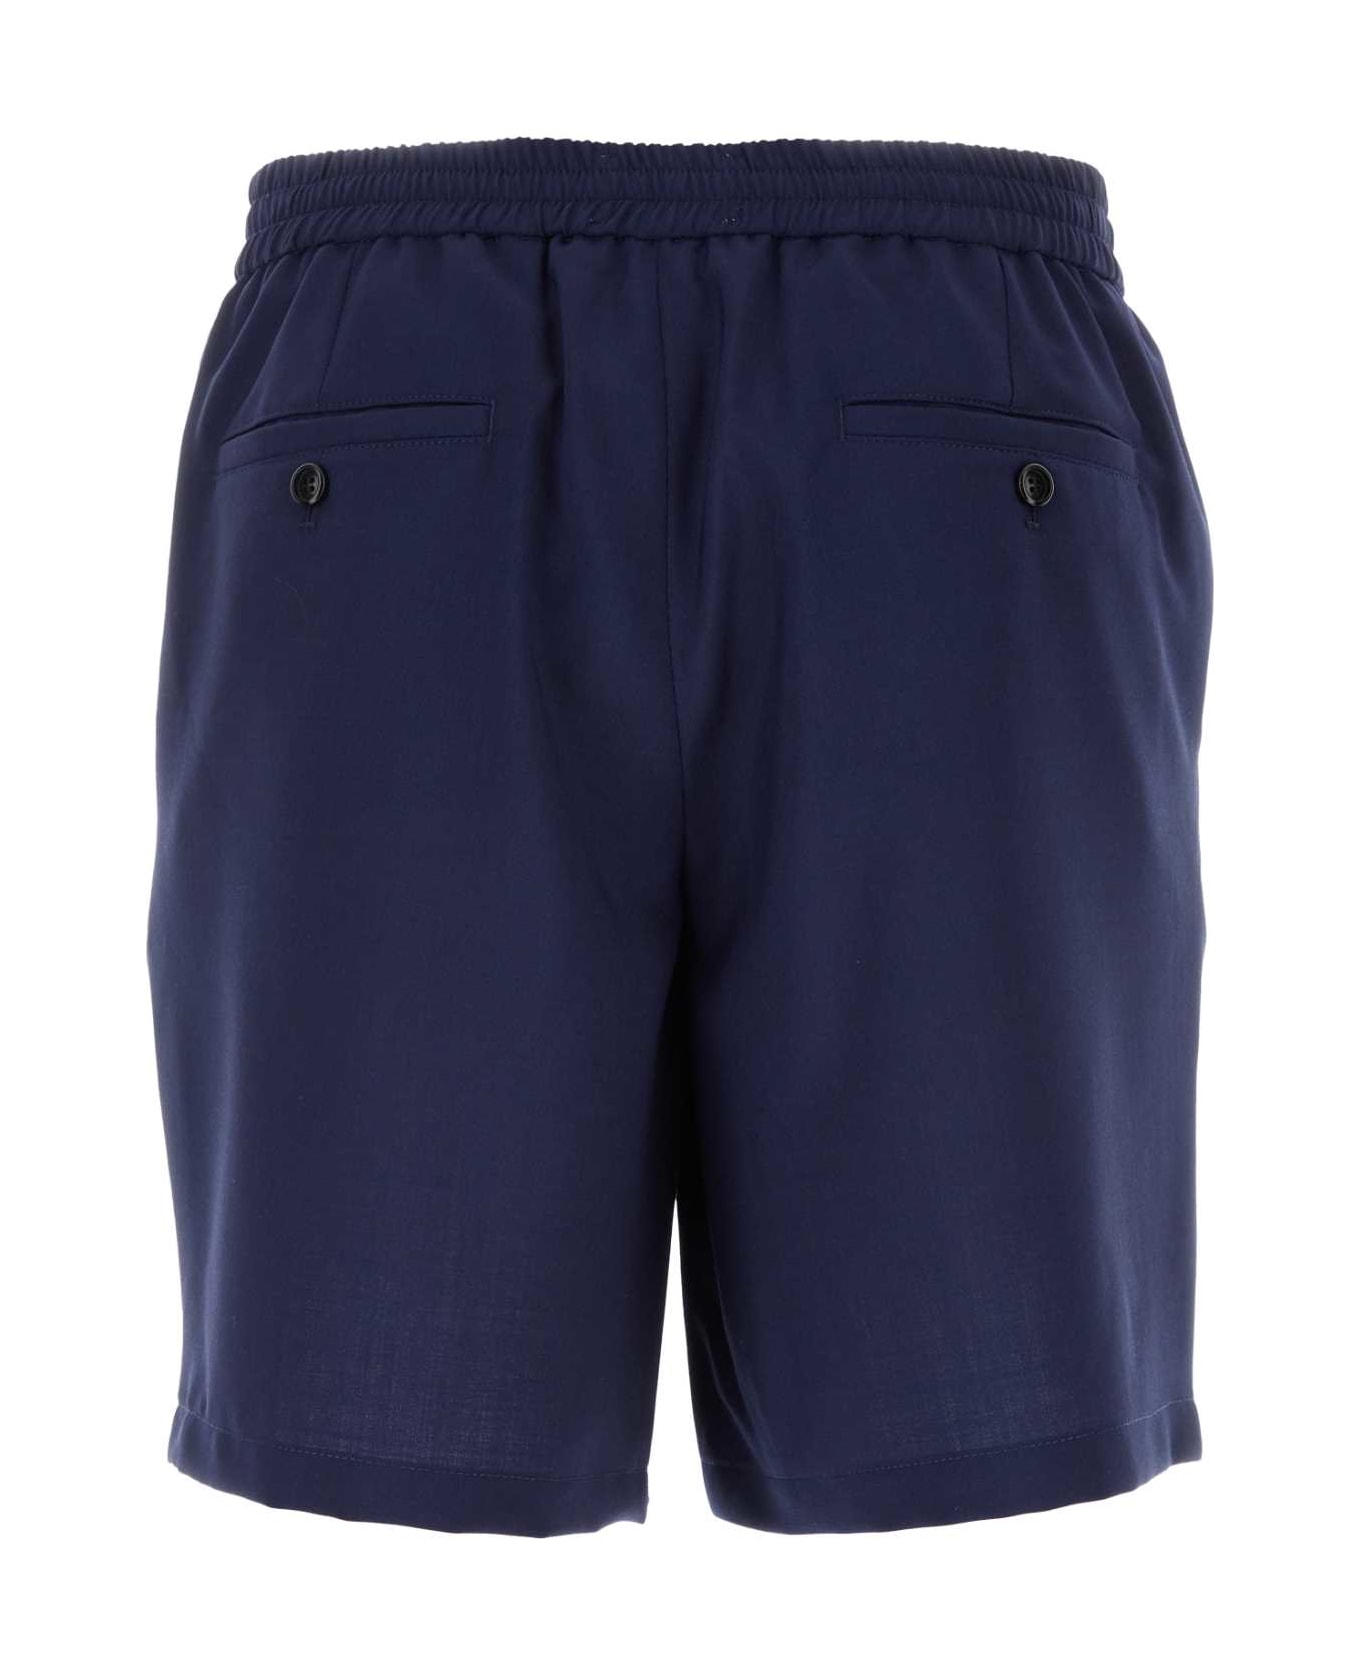 Ami Alexandre Mattiussi Navy Blue Twill Bermuda Shorts - 491